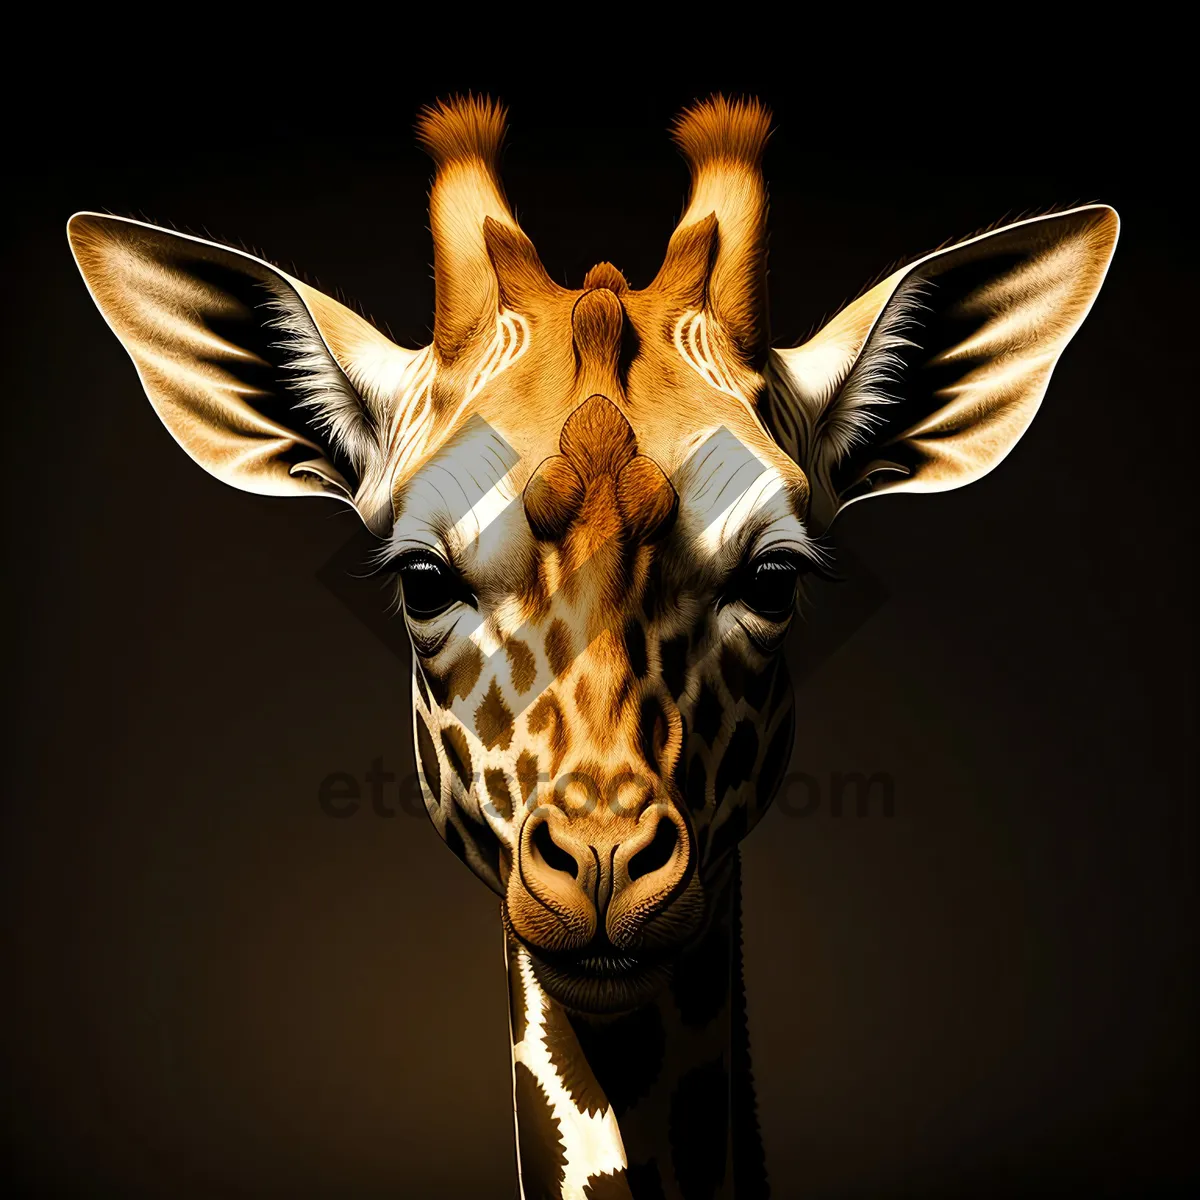 Picture of Giraffe Spine Anatomy: Black X-ray of Human Head